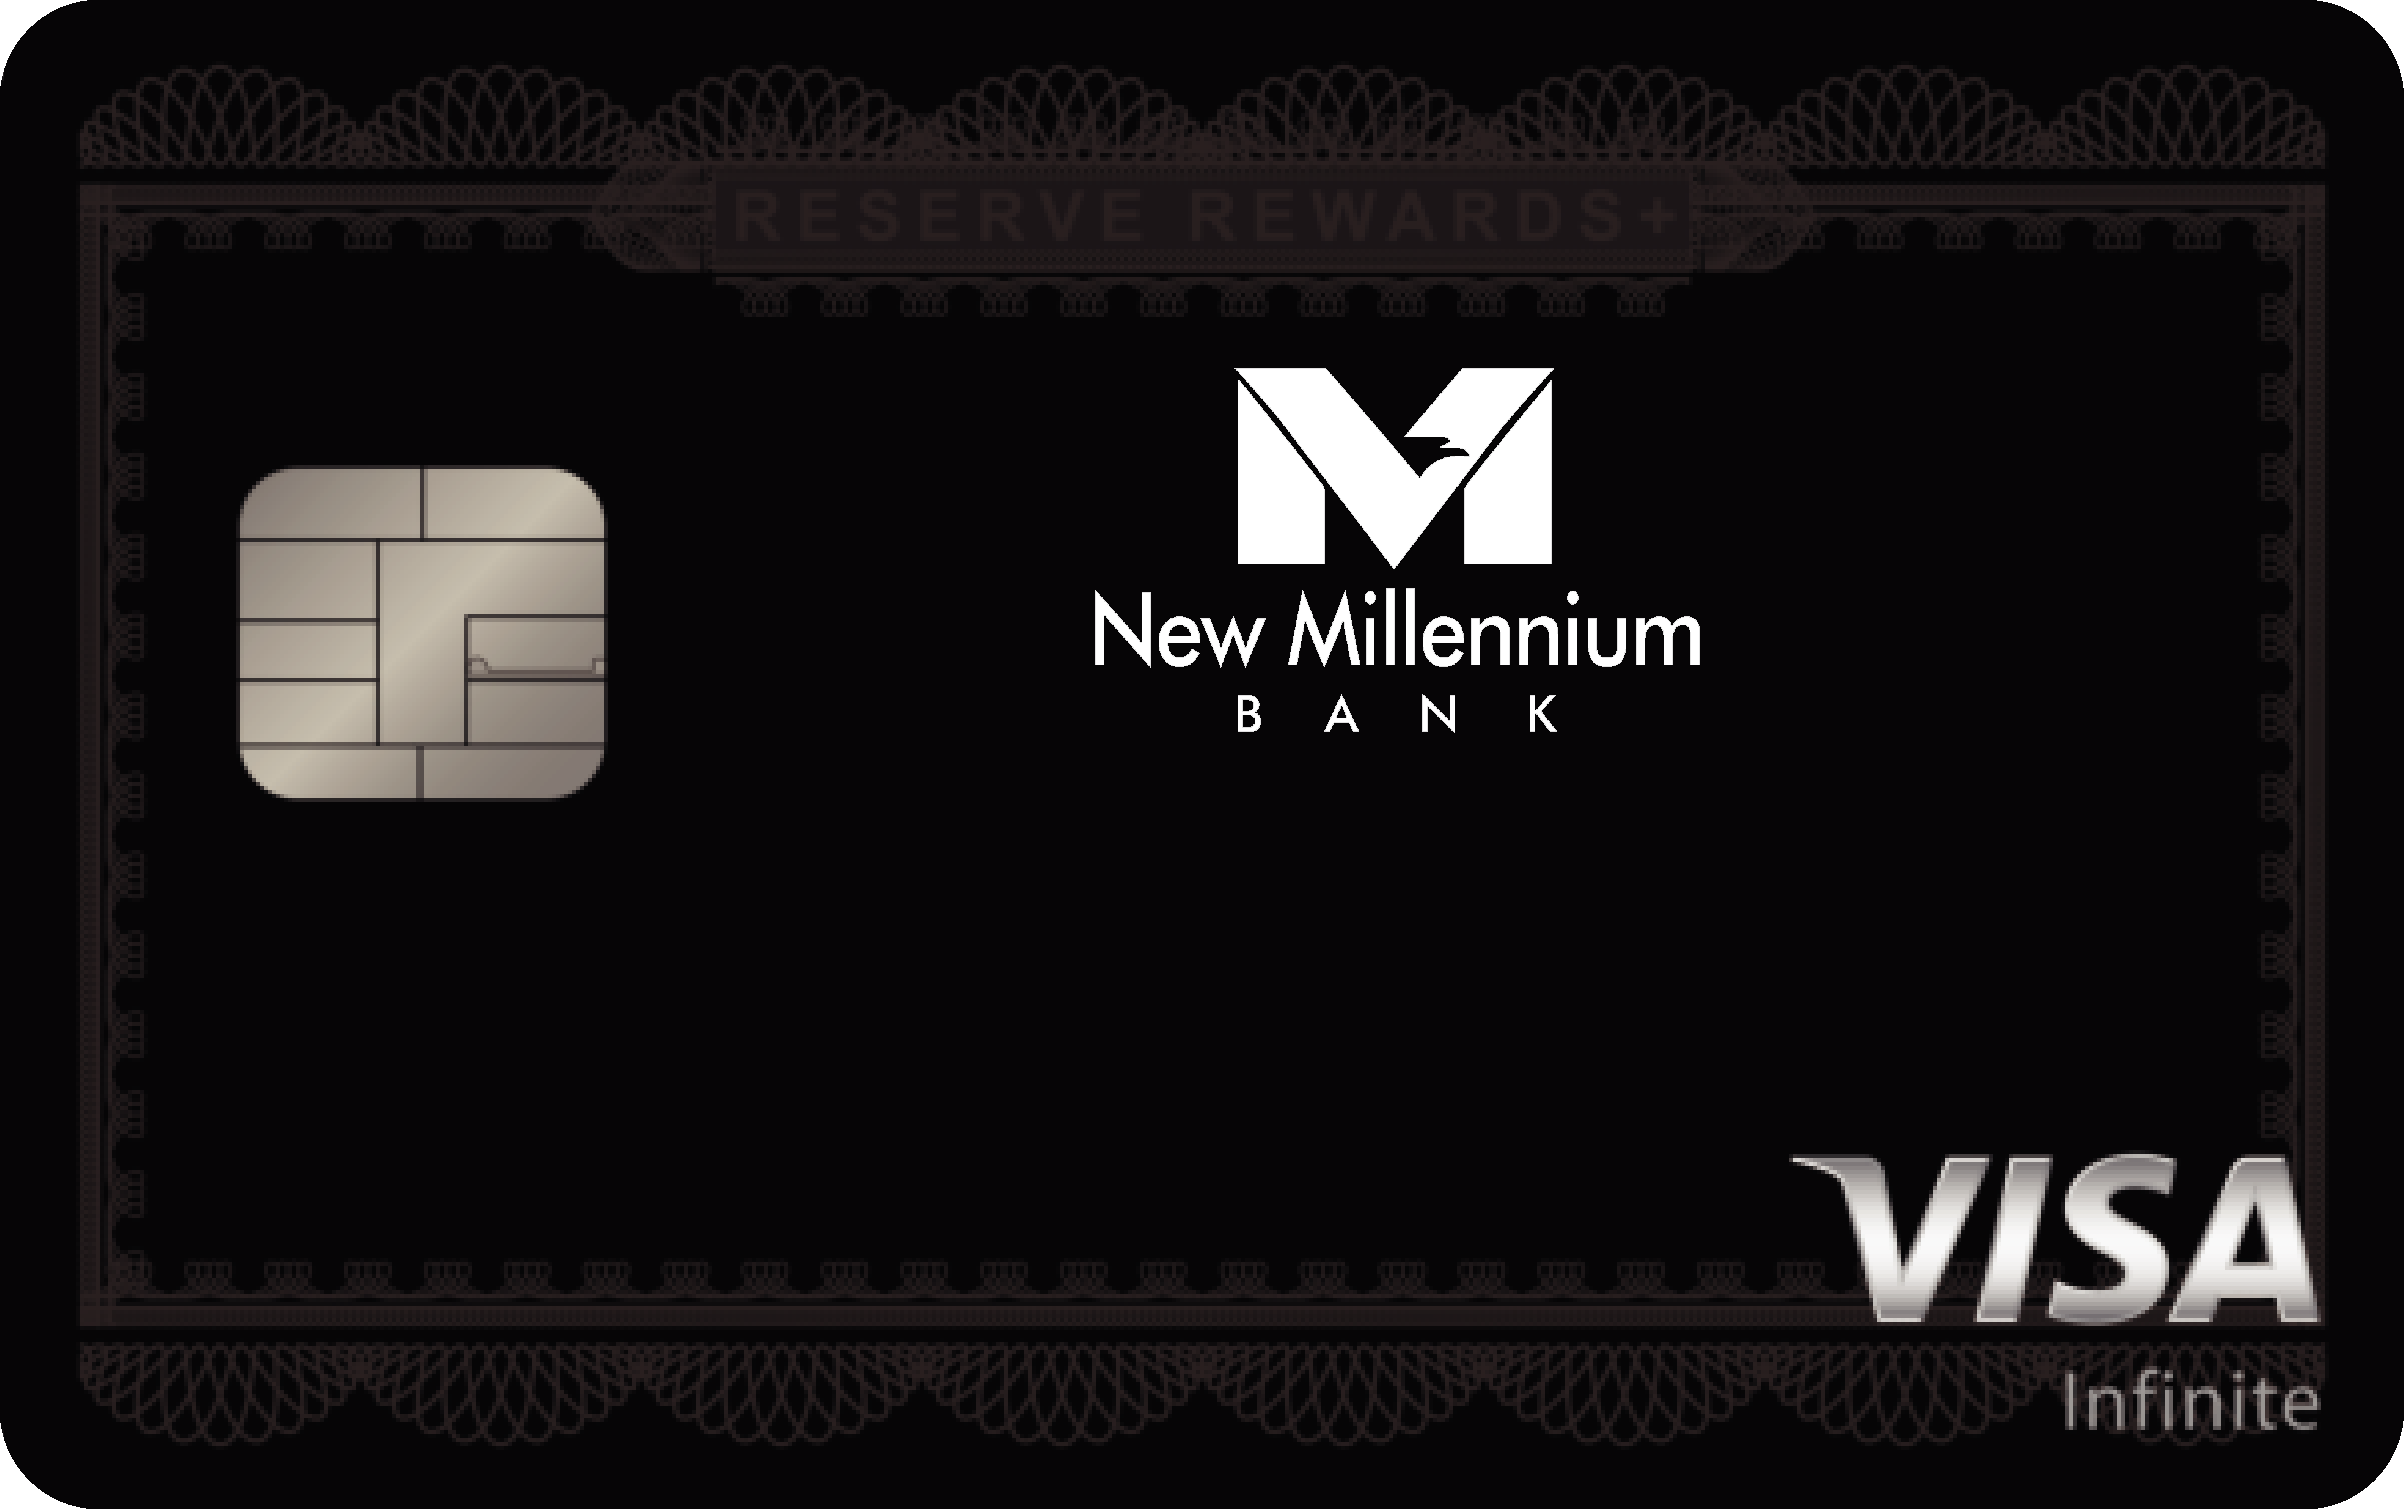 New Millennium Bank